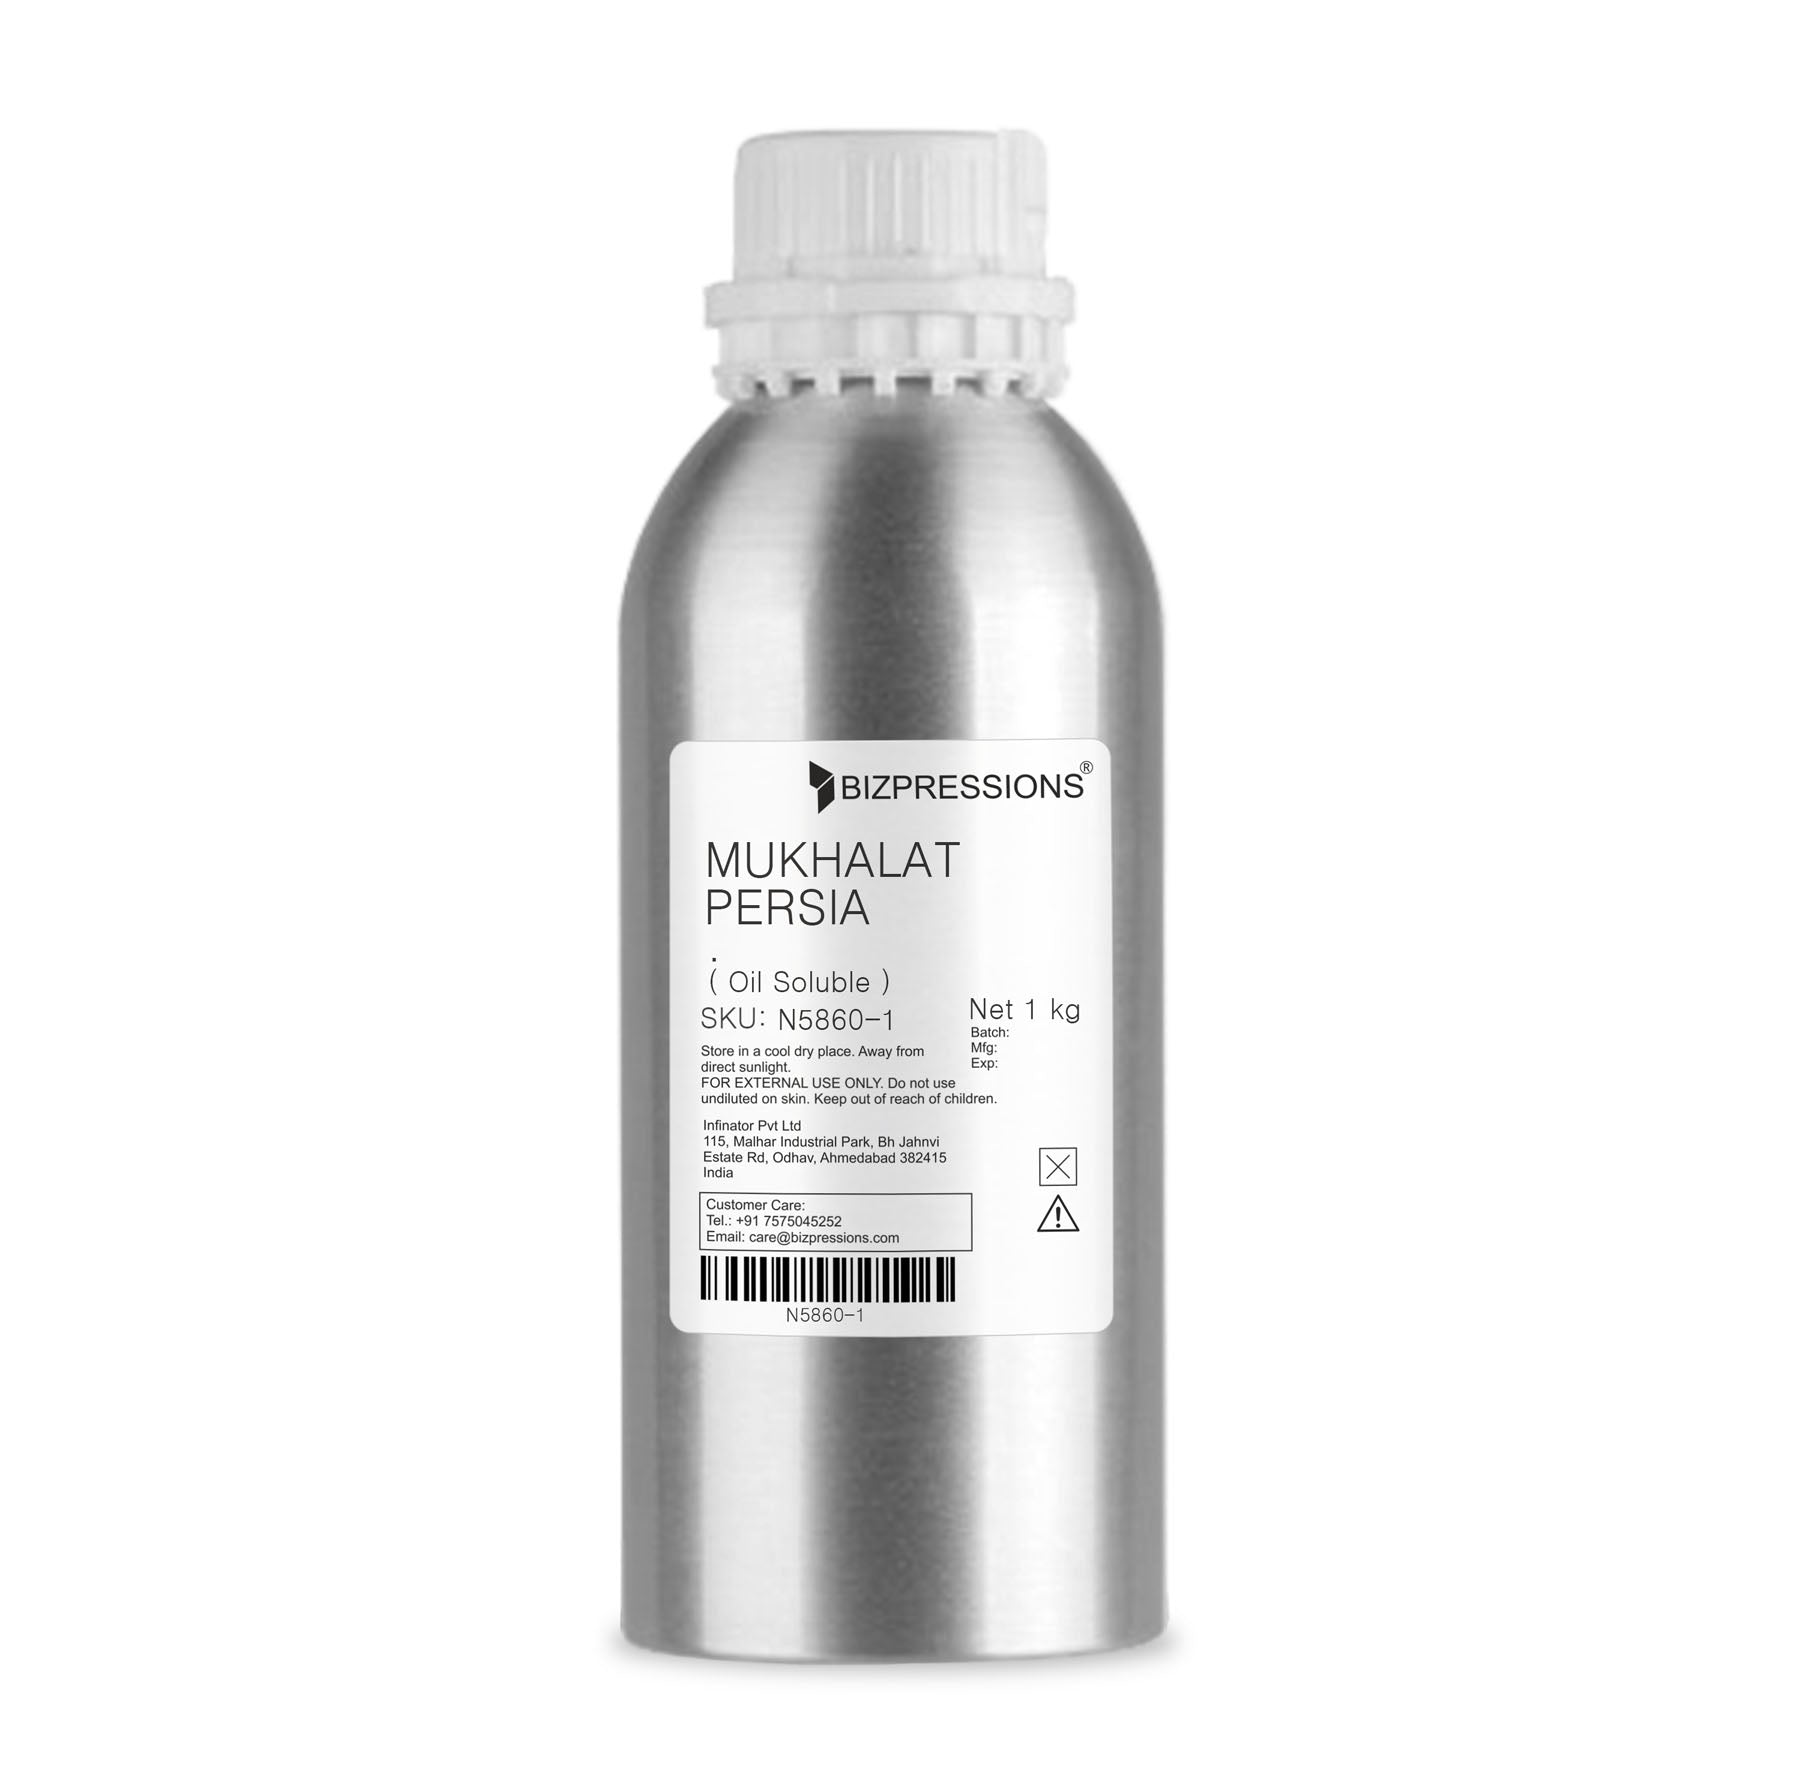 MUKHALAT PERSIA - Fragrance ( Oil Soluble ) - 1 kg